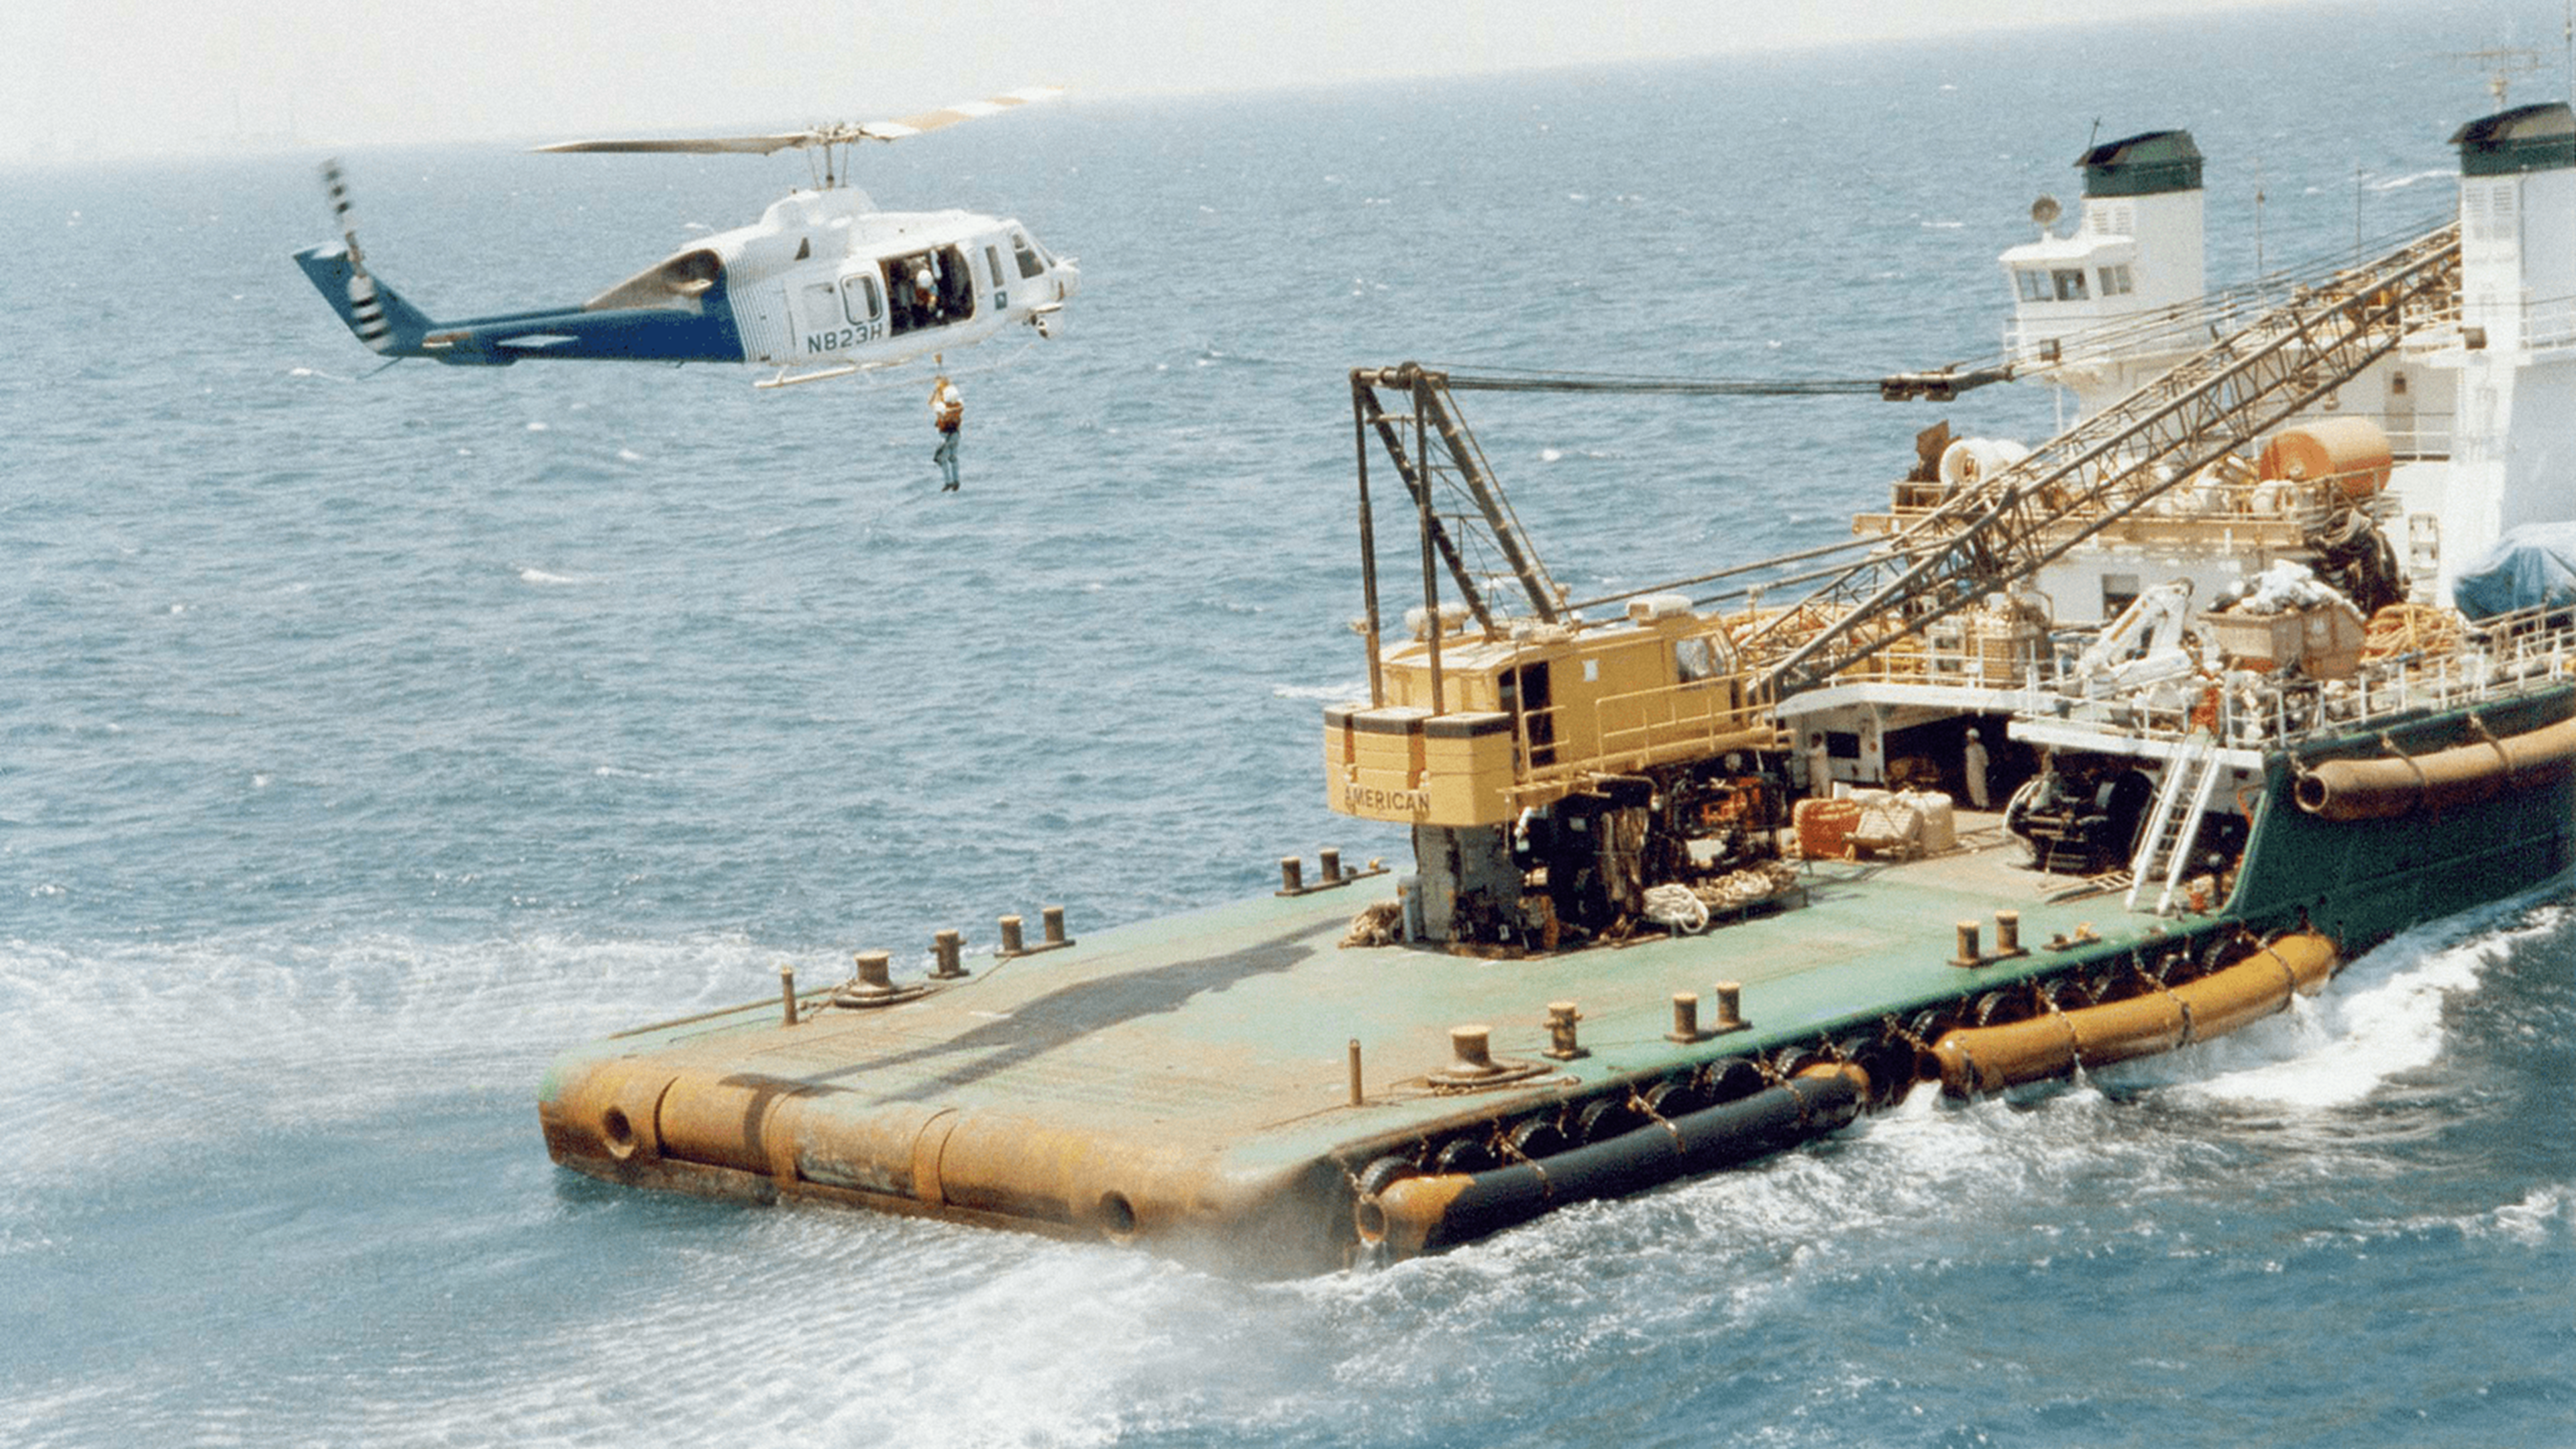 Mukamalah helocopter performing a maritime landing on a ship dock